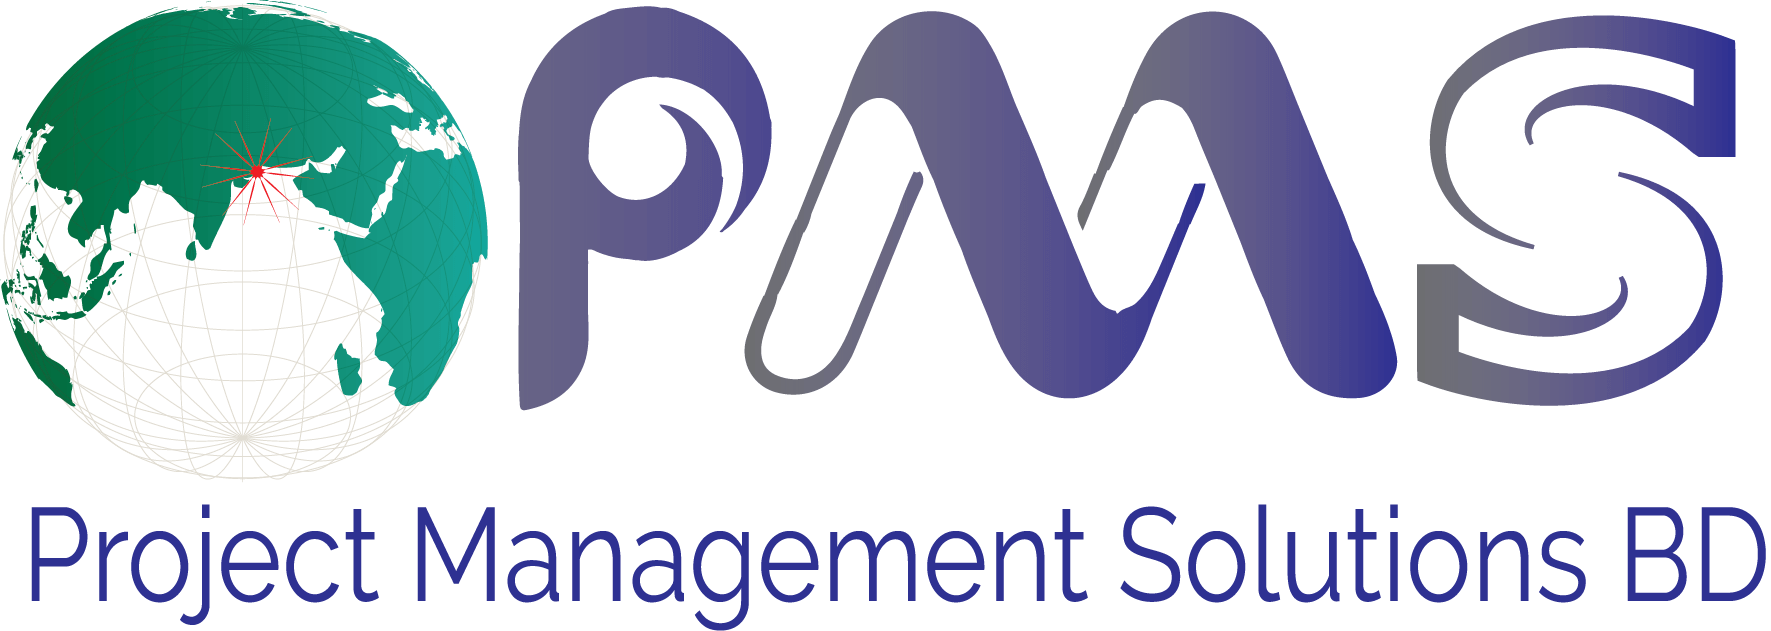 PMS Logo - PMS. Project Mangemant Solutions